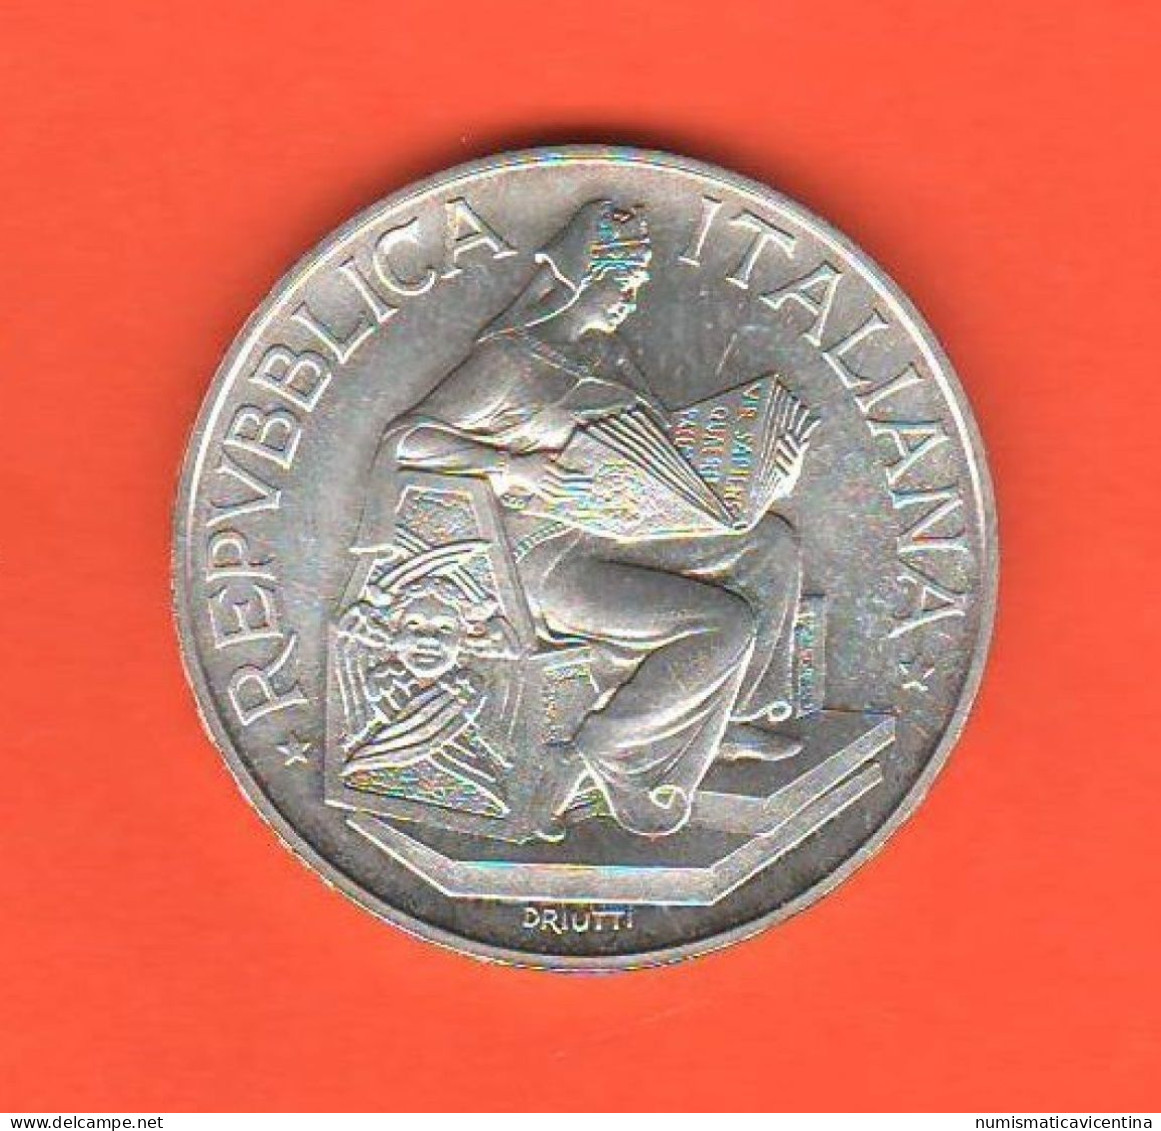 Italia 500 Lire 1993 X 650th Université Pisa Università University Italie Italy Silver Coin  C 9 - Commémoratives